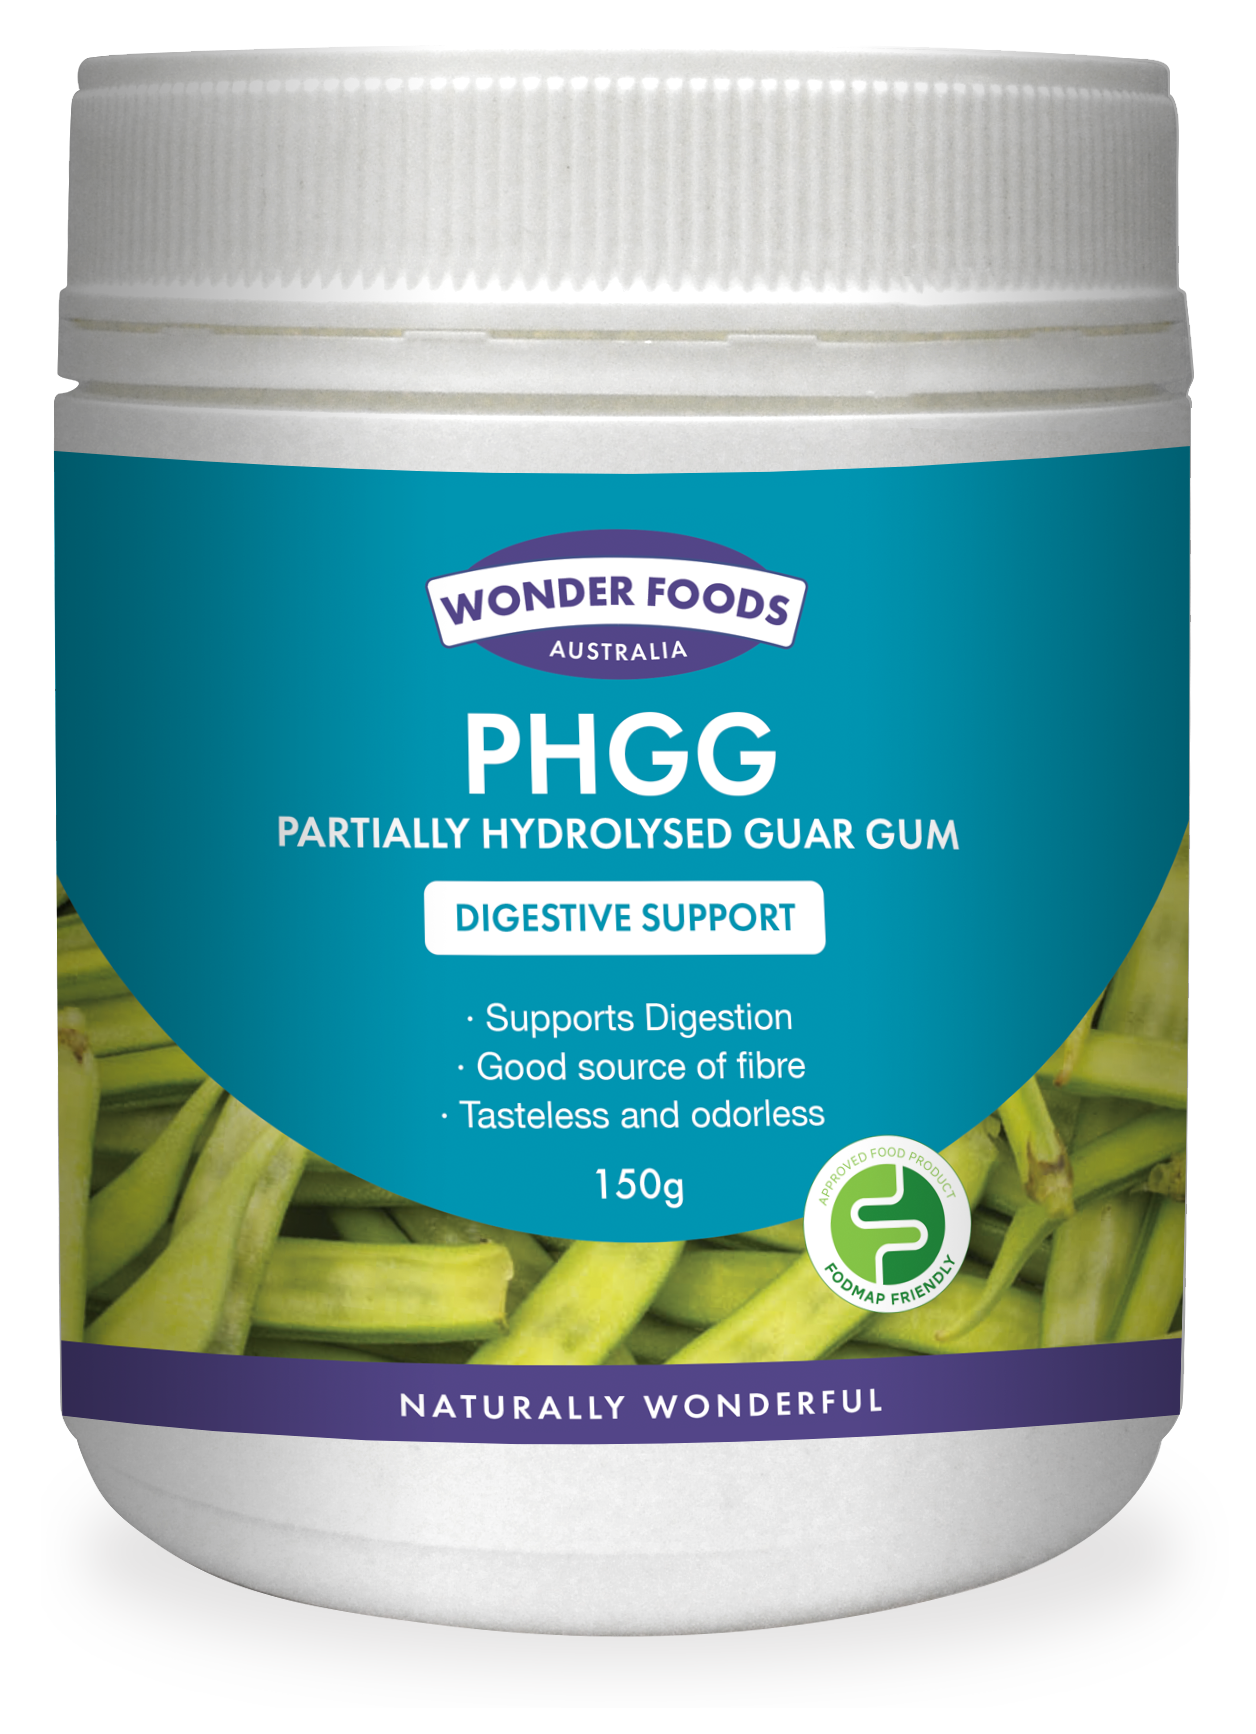 Wonder Foods Australia Partially Hydrolysed Guar Gum - PHGG 150g